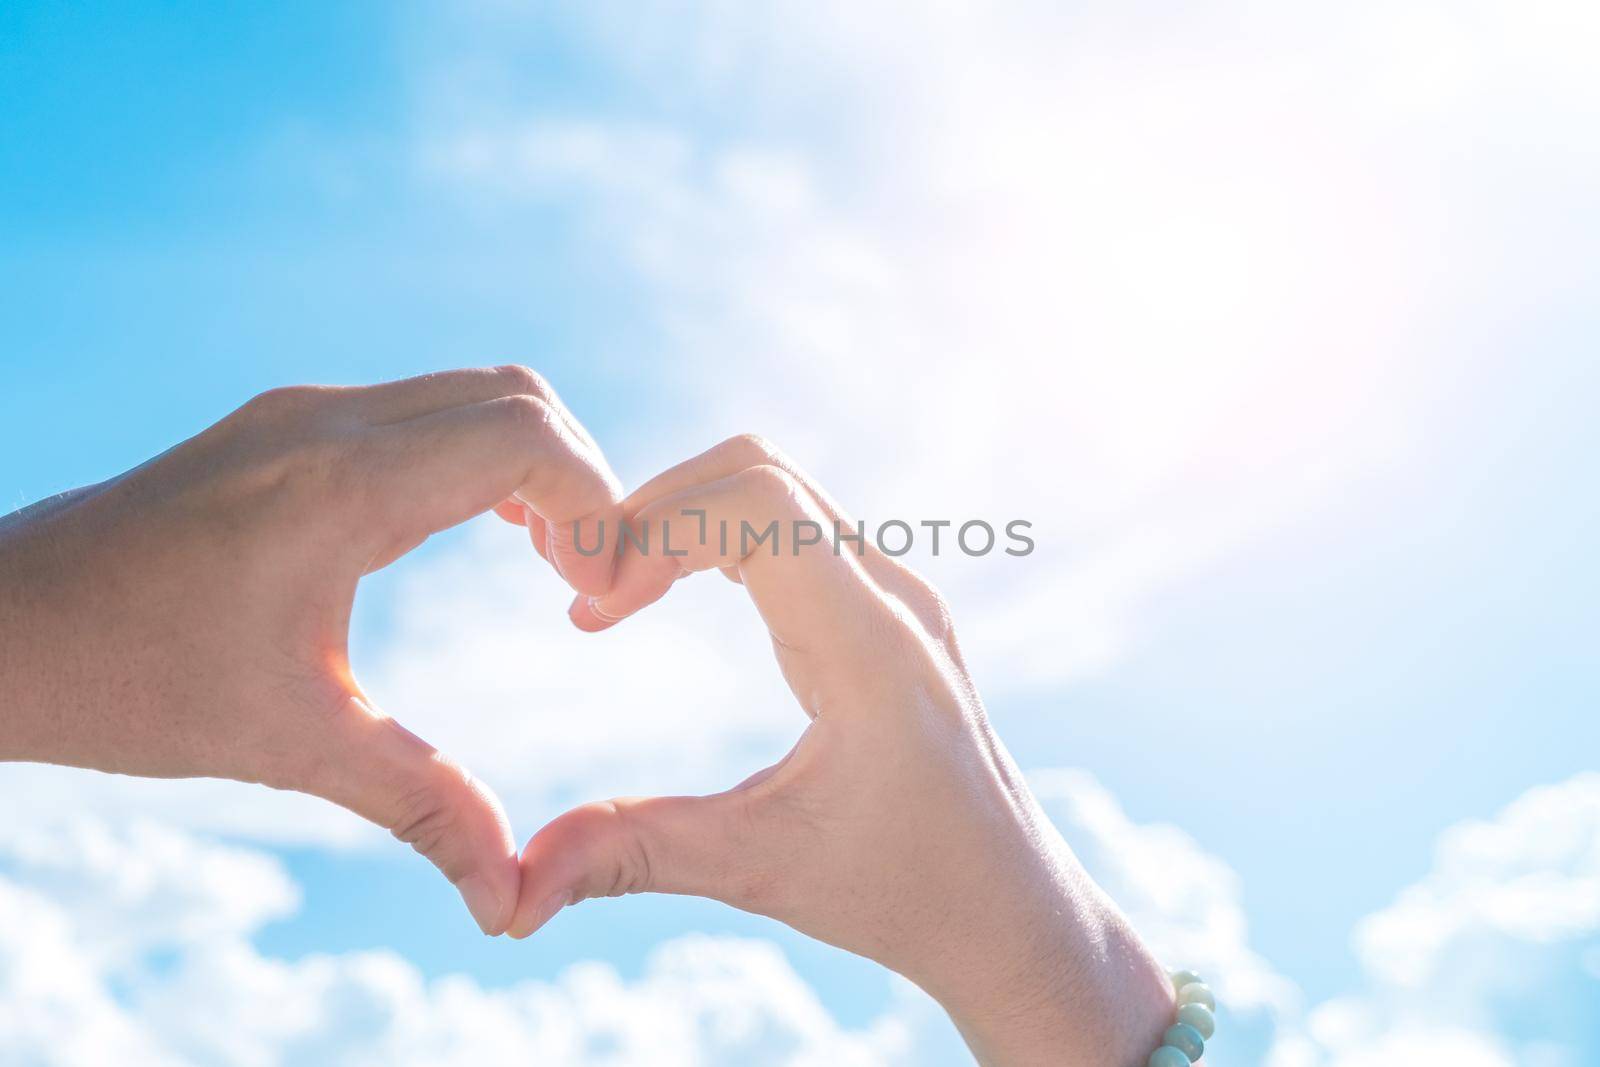 Woman hand do heart shape on blue sky and beach background.